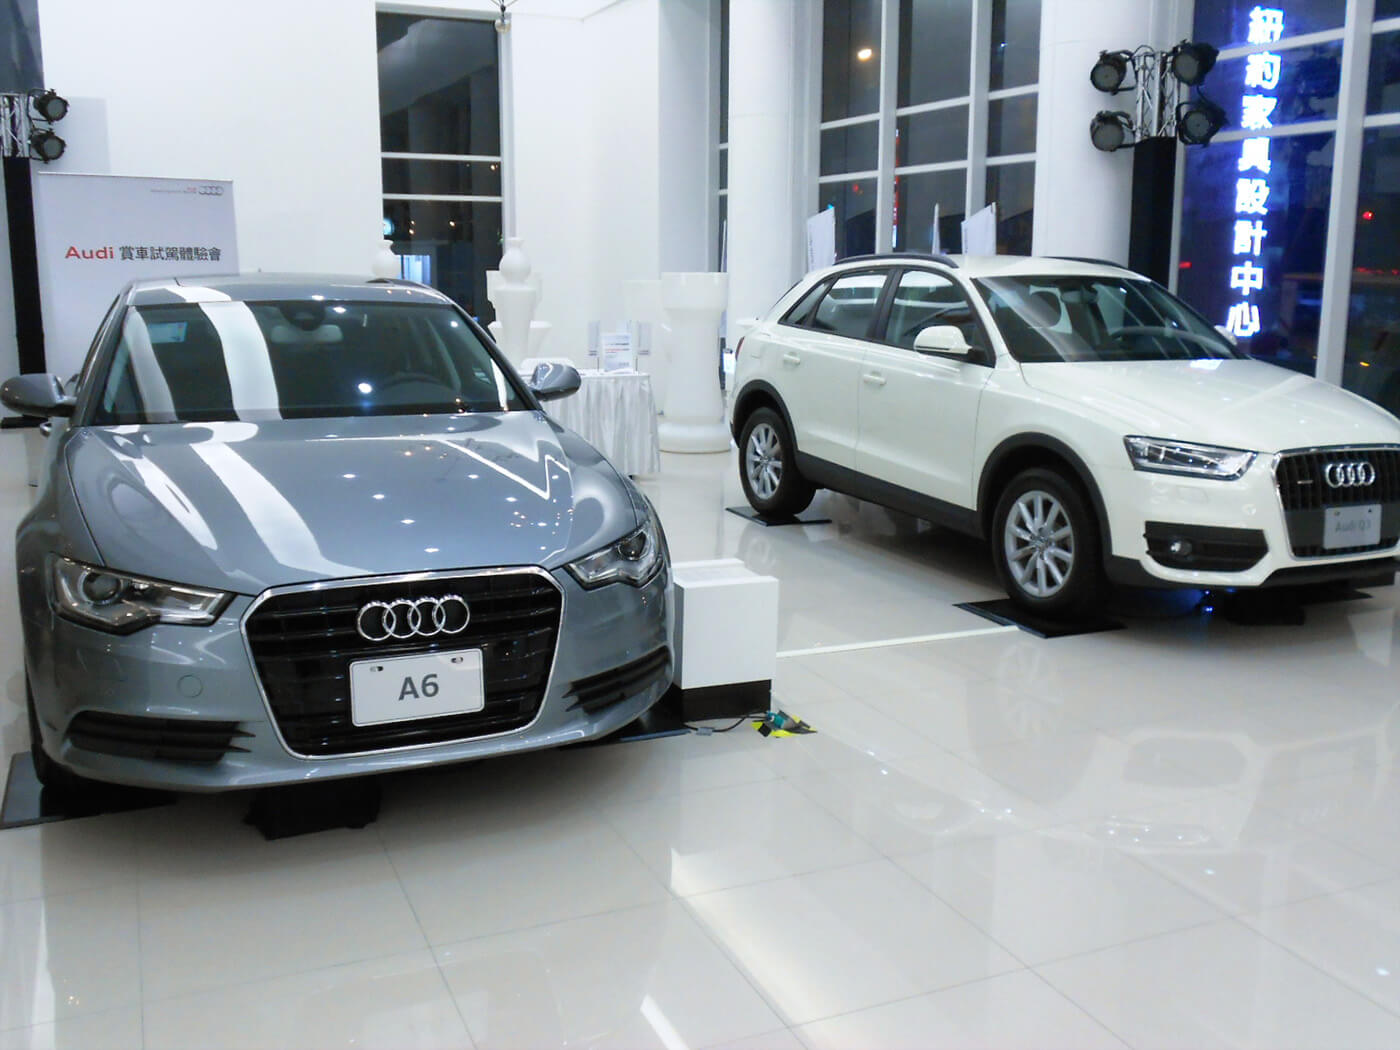 Audi Motor Show 2013